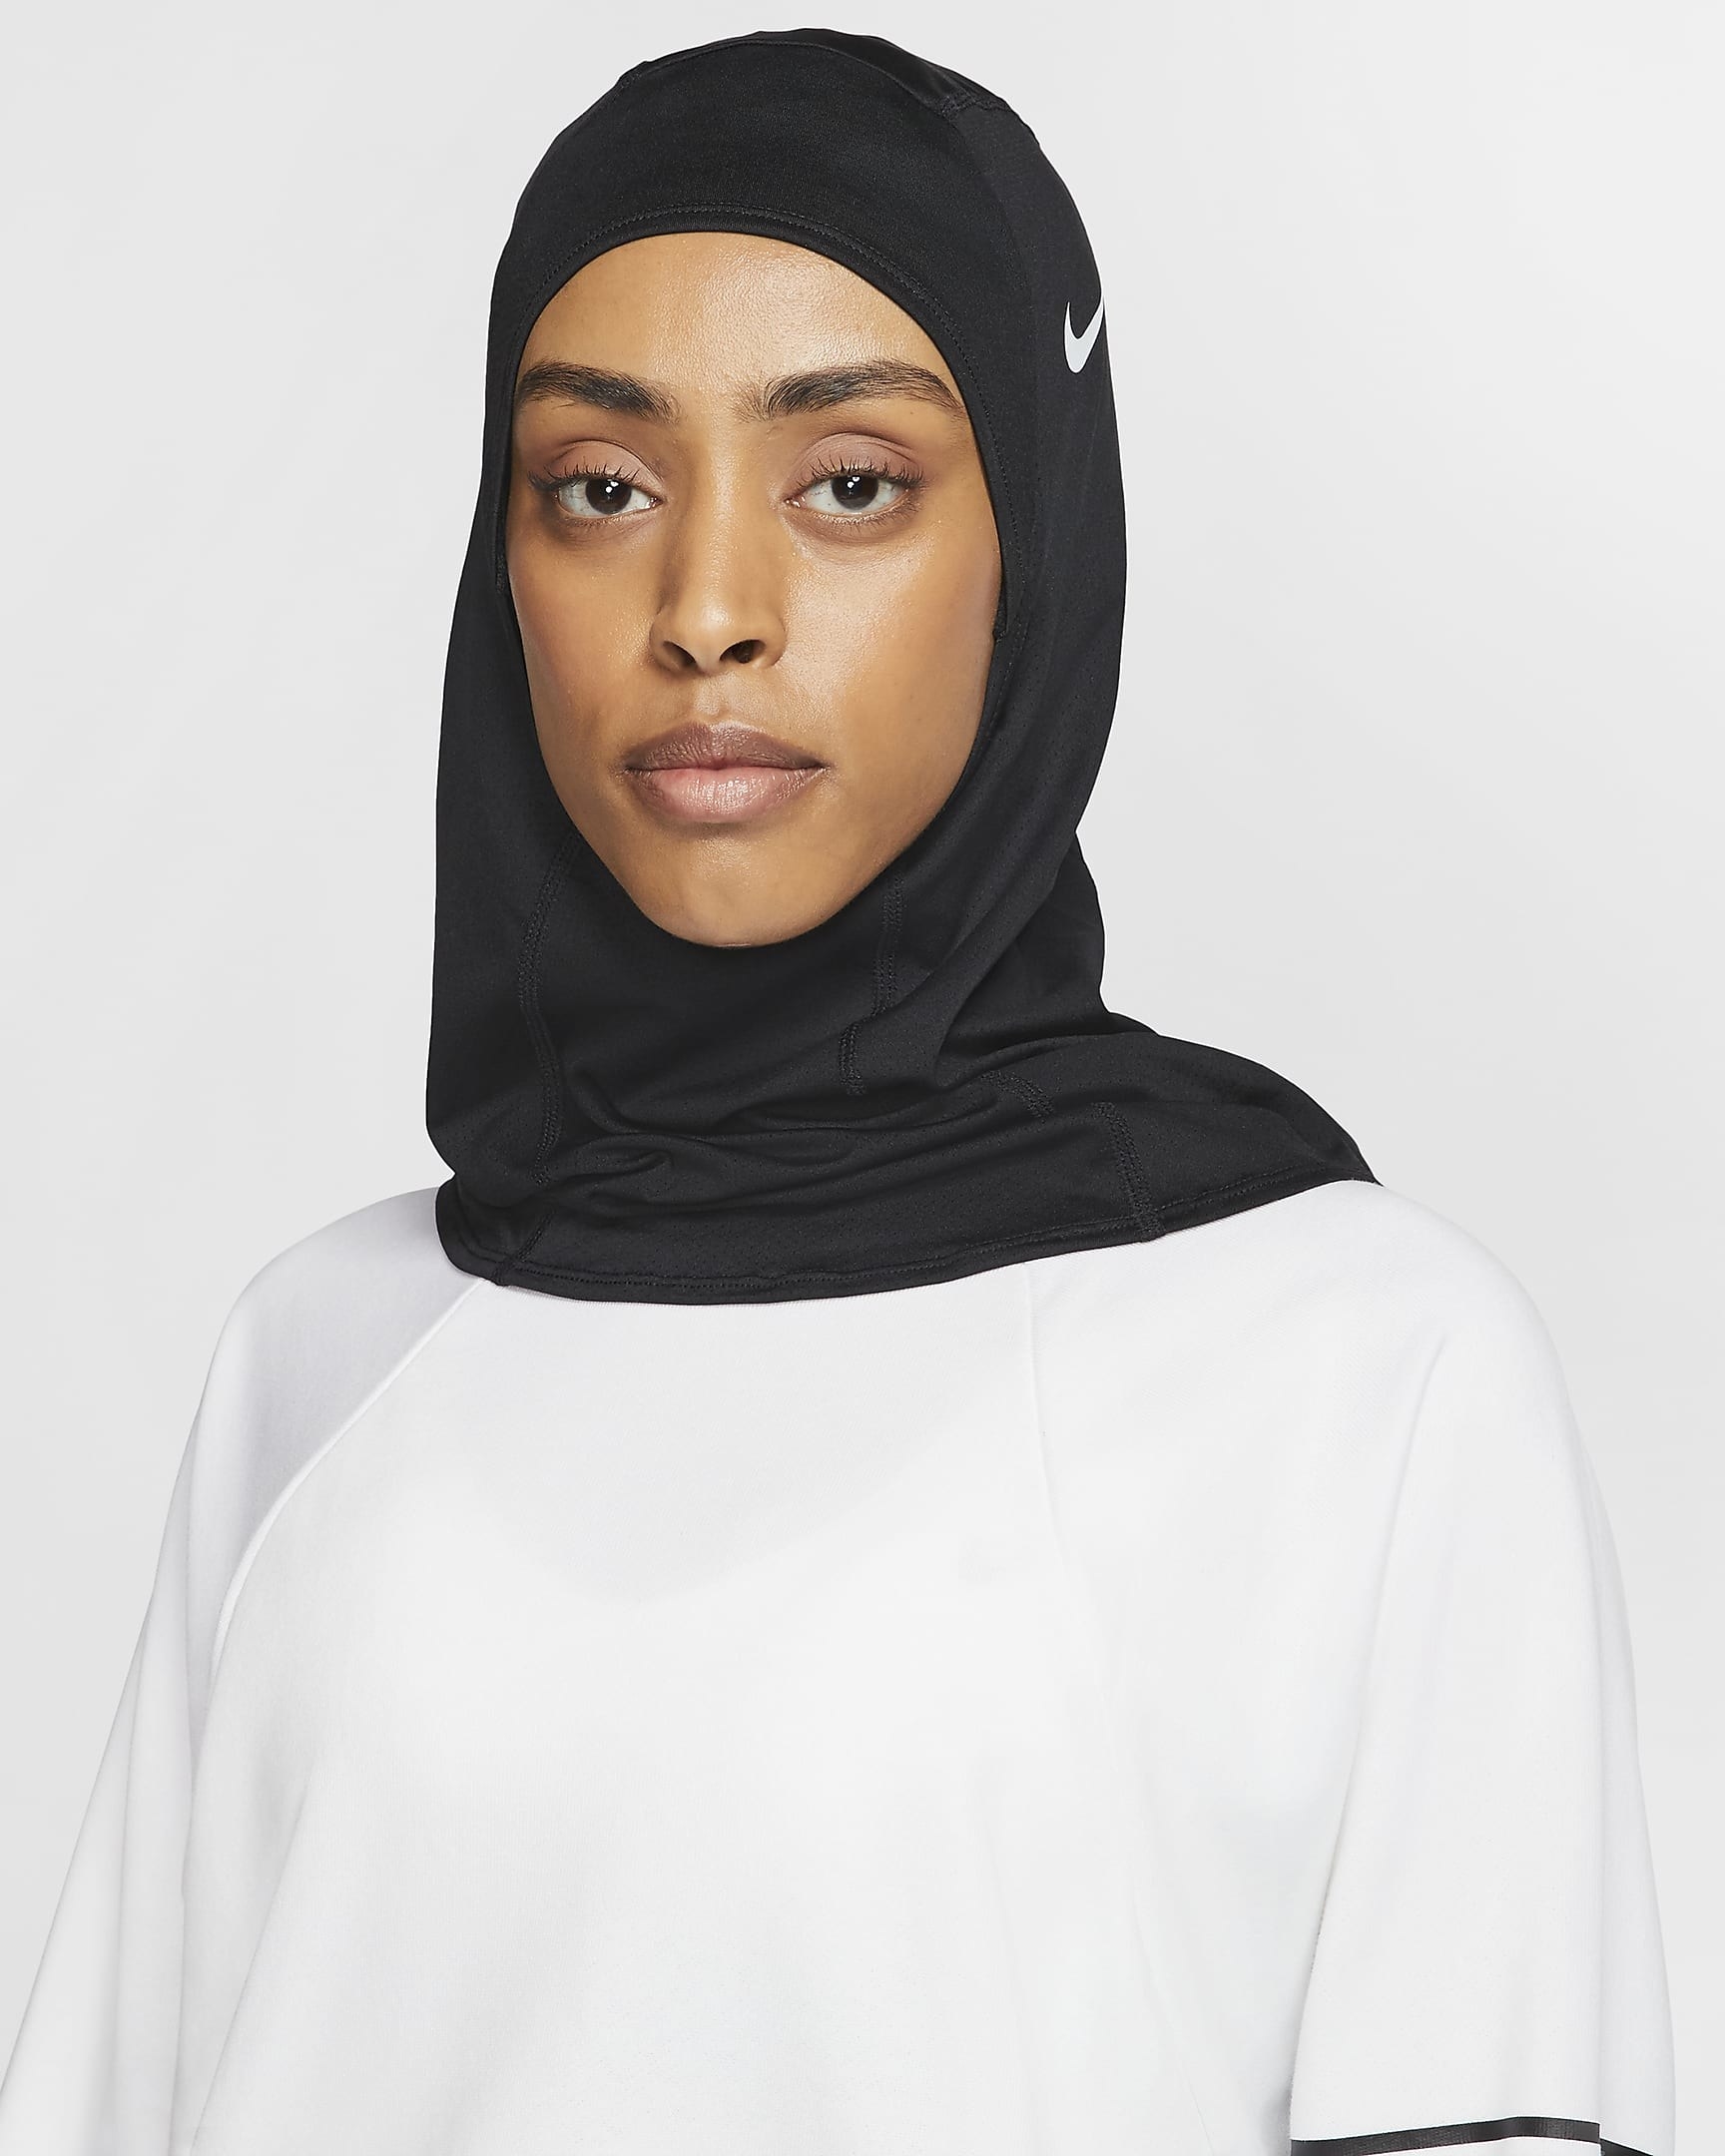 Model wearing black hijab with white nike check logo